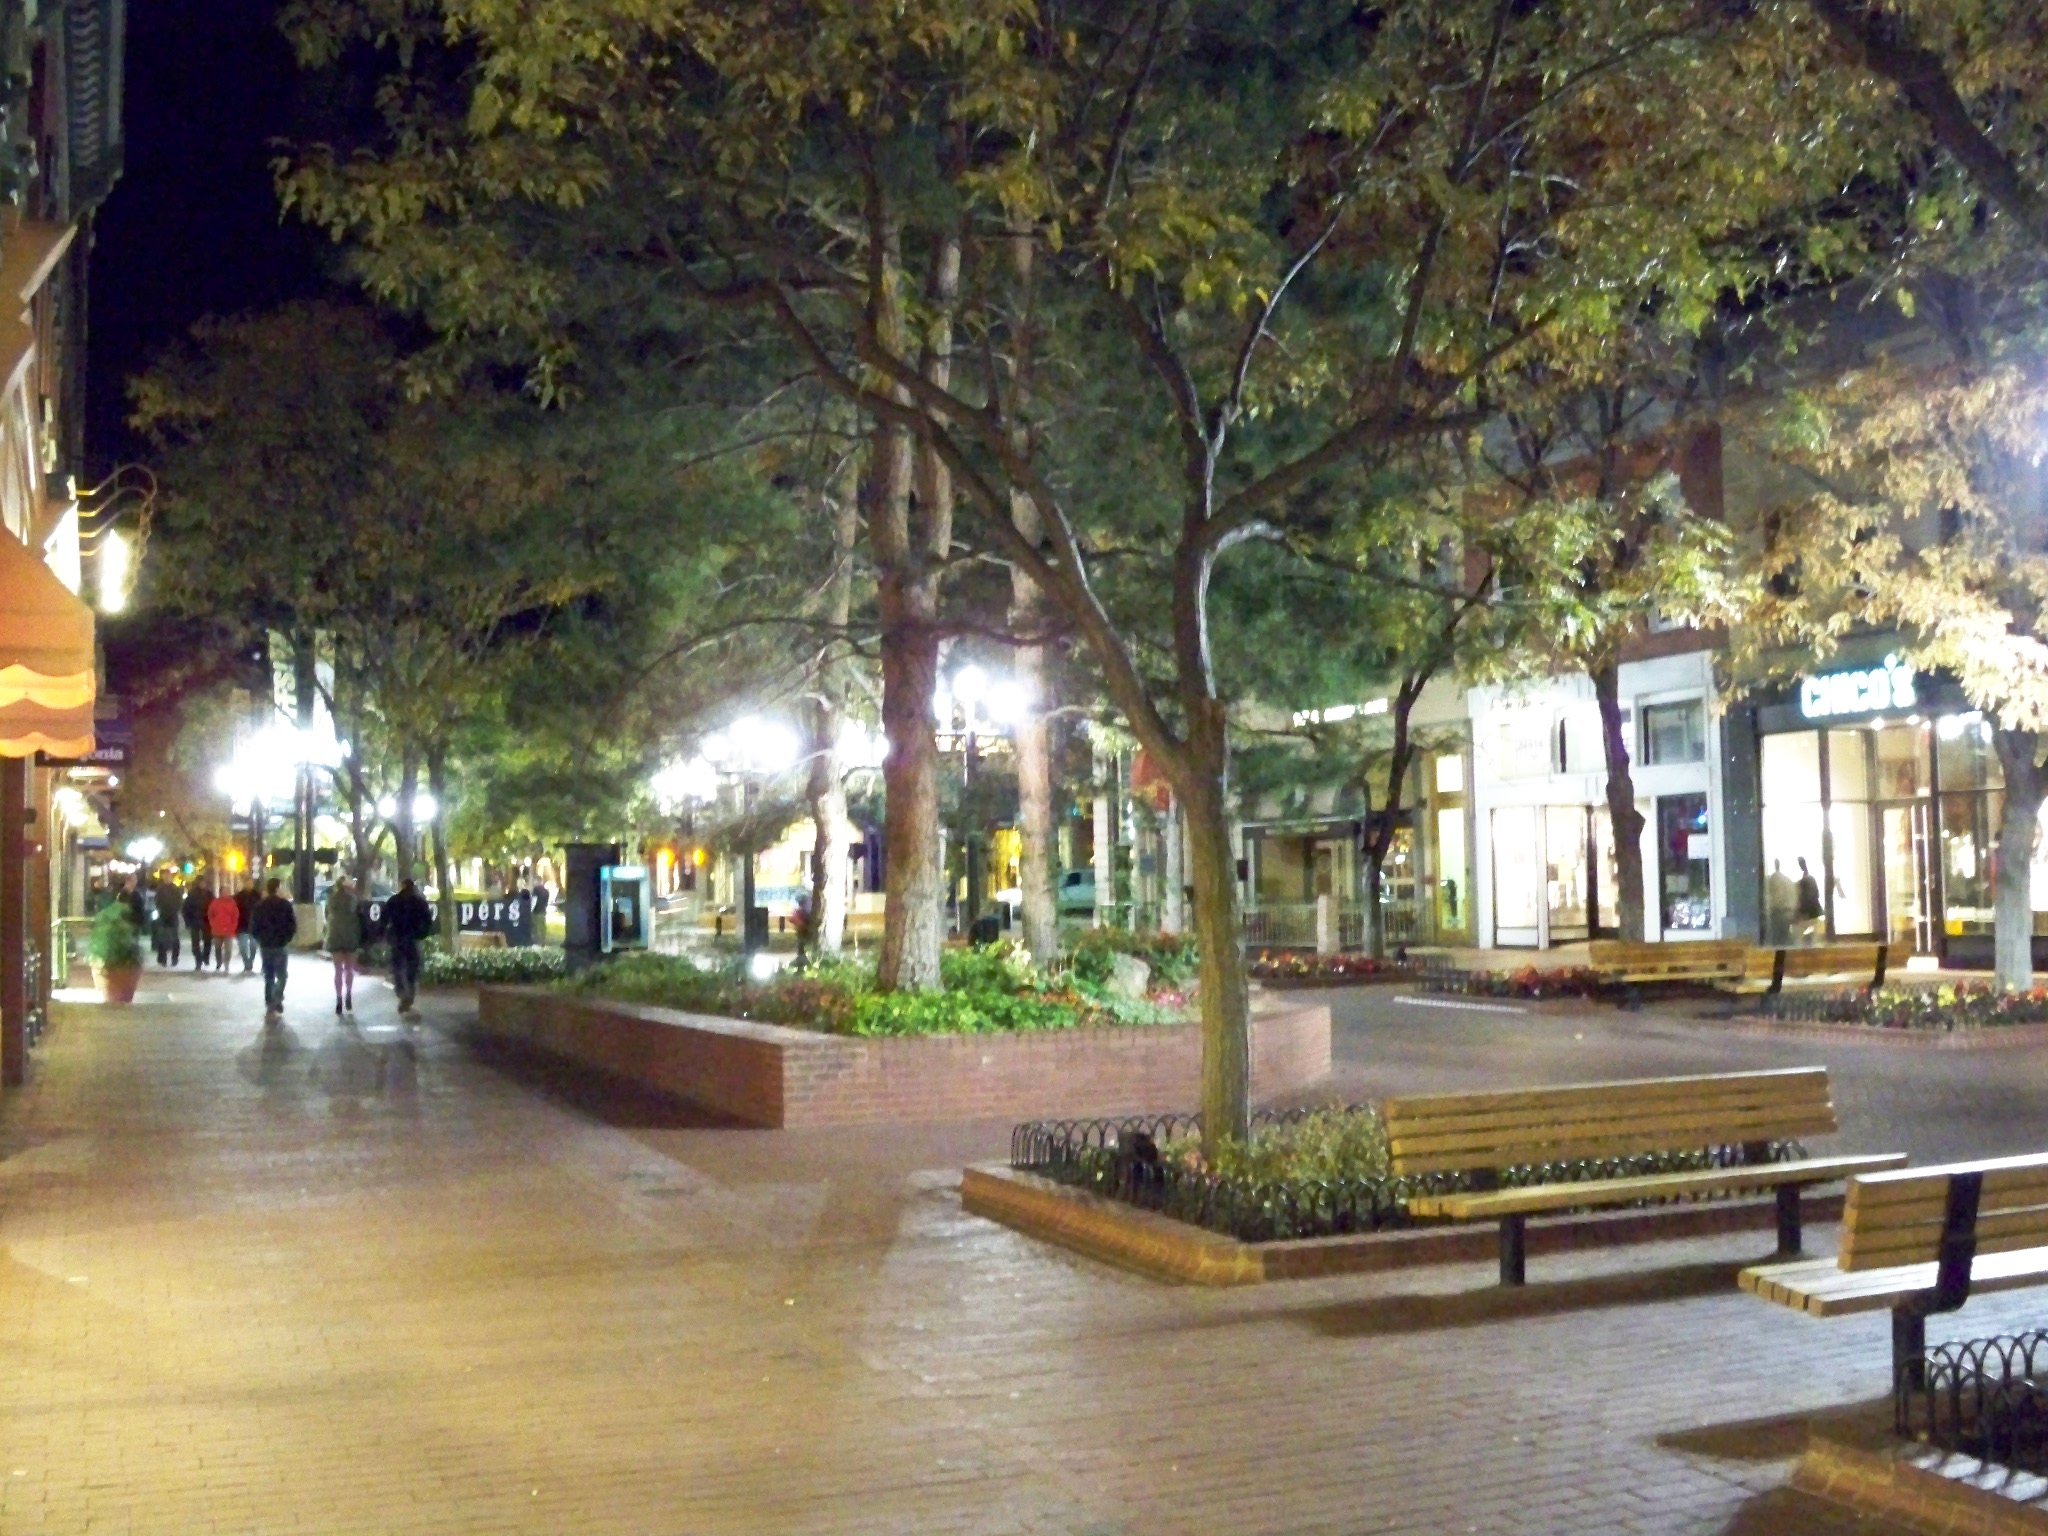 people walking down the sidewalk at night, in front of buildings